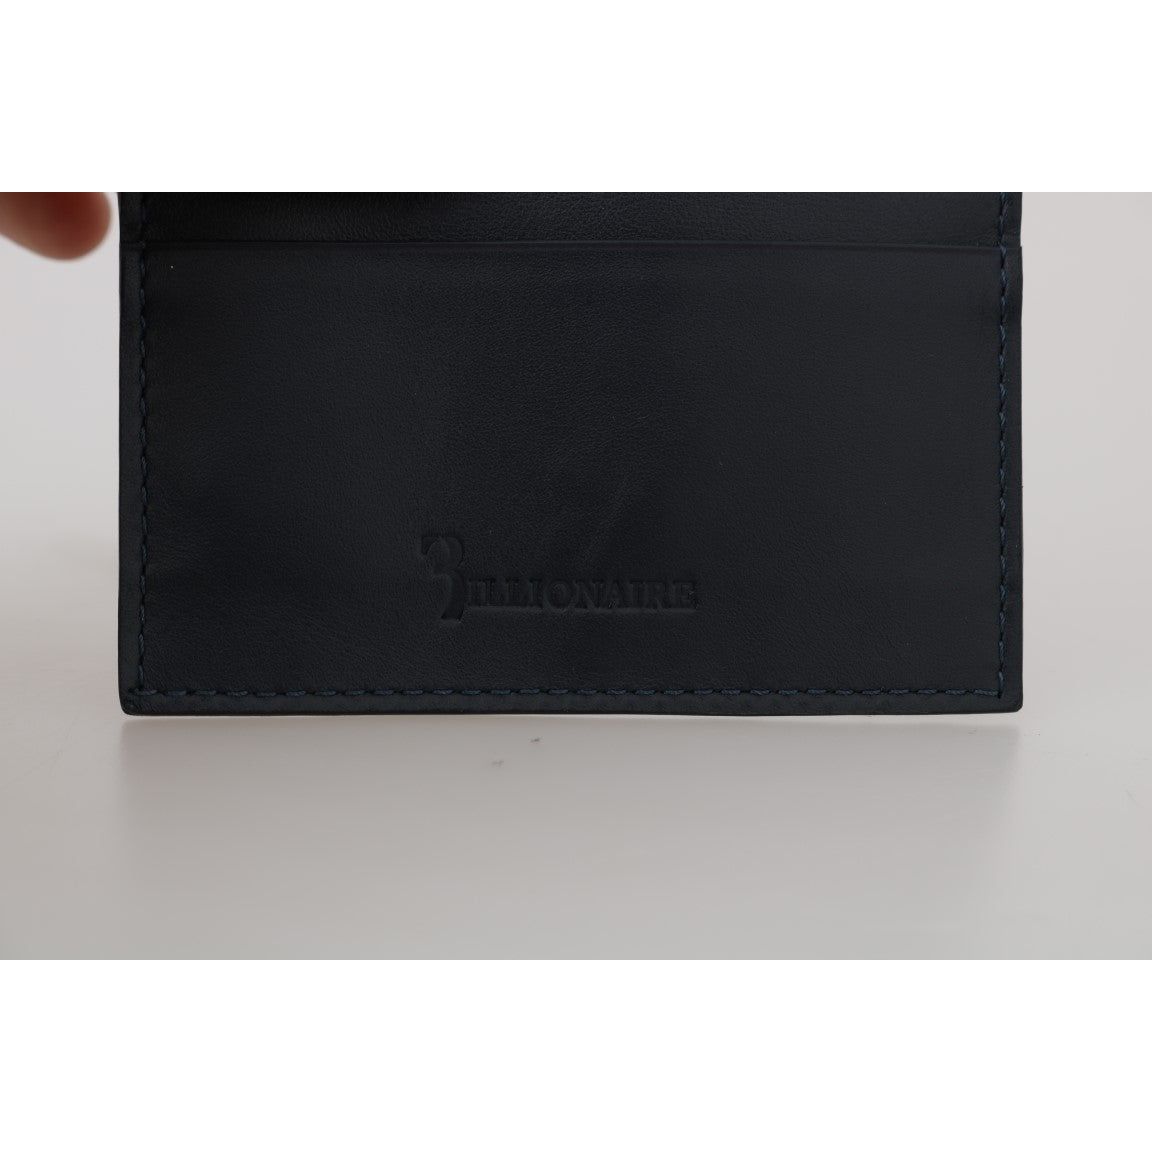 Billionaire Italian Couture Elegant Blue Leather Men's Wallet blue-leather-cardholder-wallet-1 Wallet 463508-blue-leather-cardholder-wallet-4-3.jpg